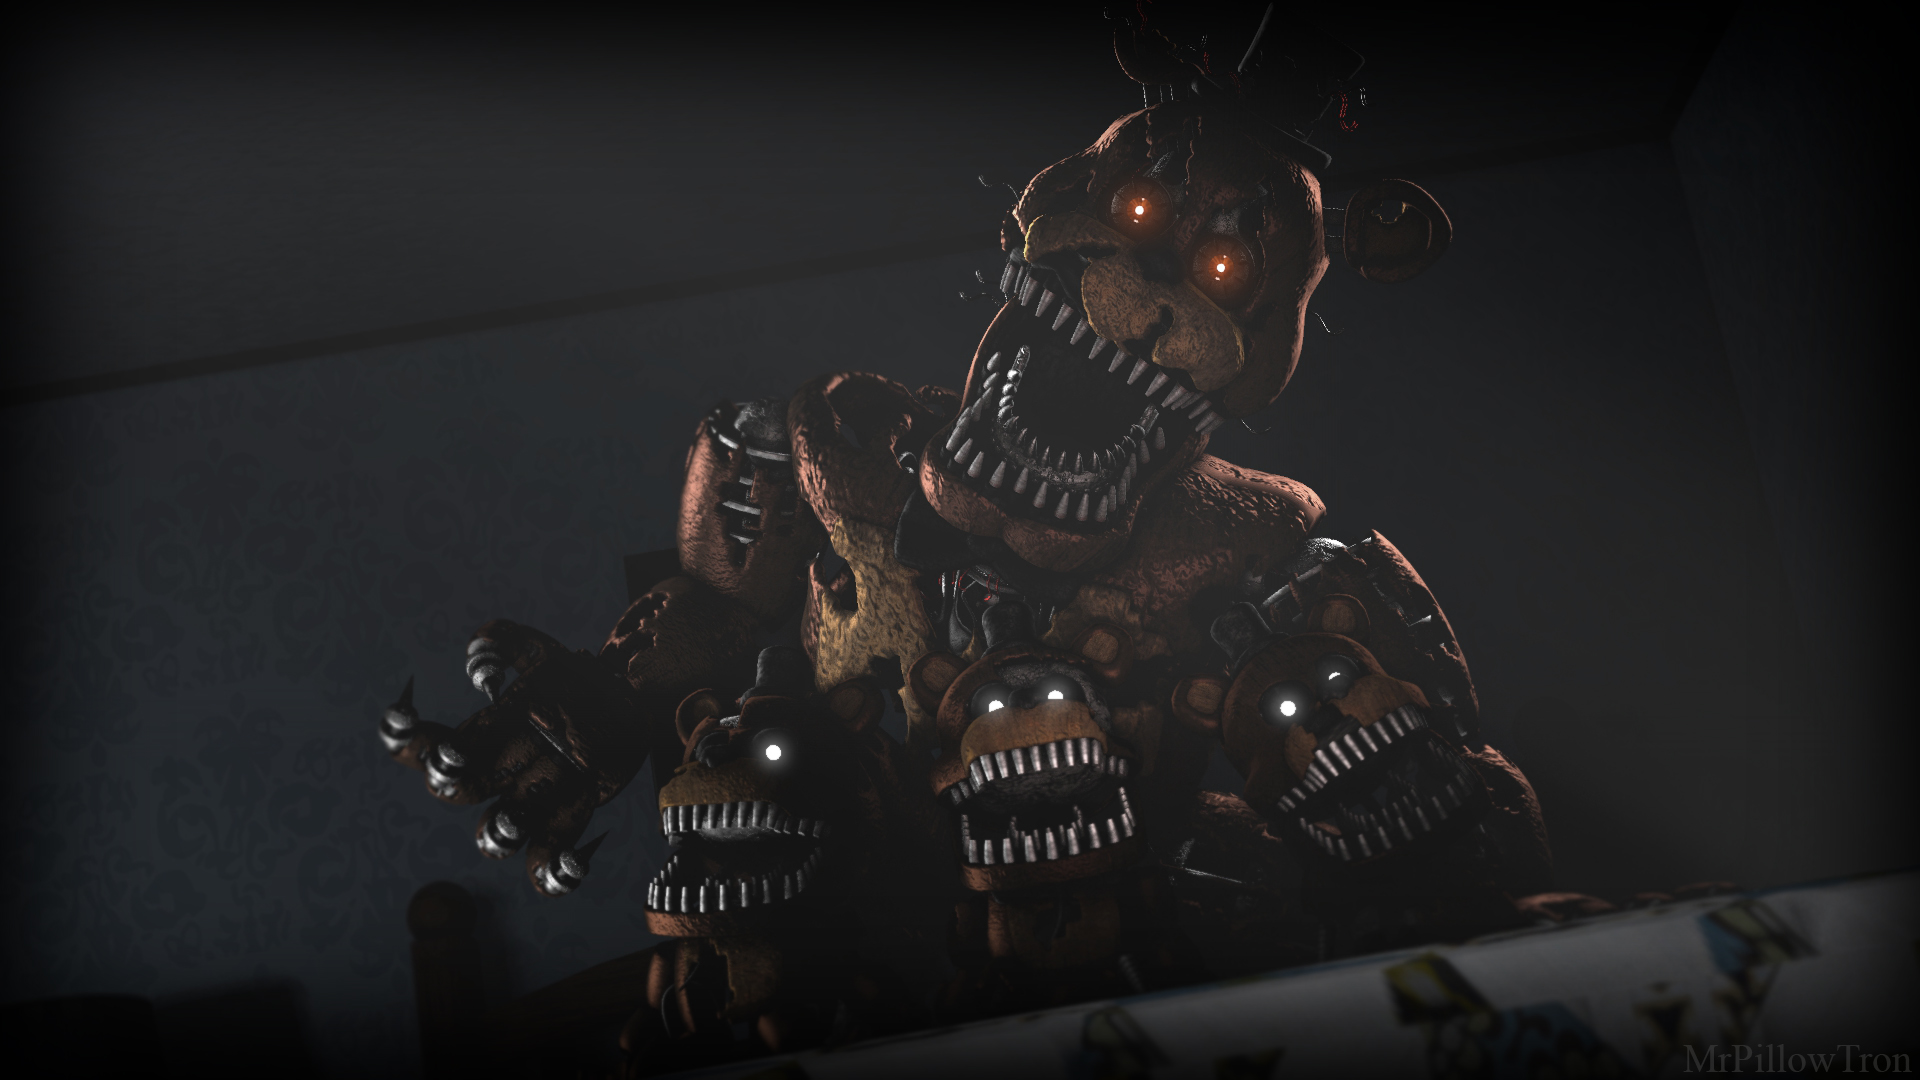 FNaF 4 Nightmare Freddy Teaser Remake by Puppetio on DeviantArt